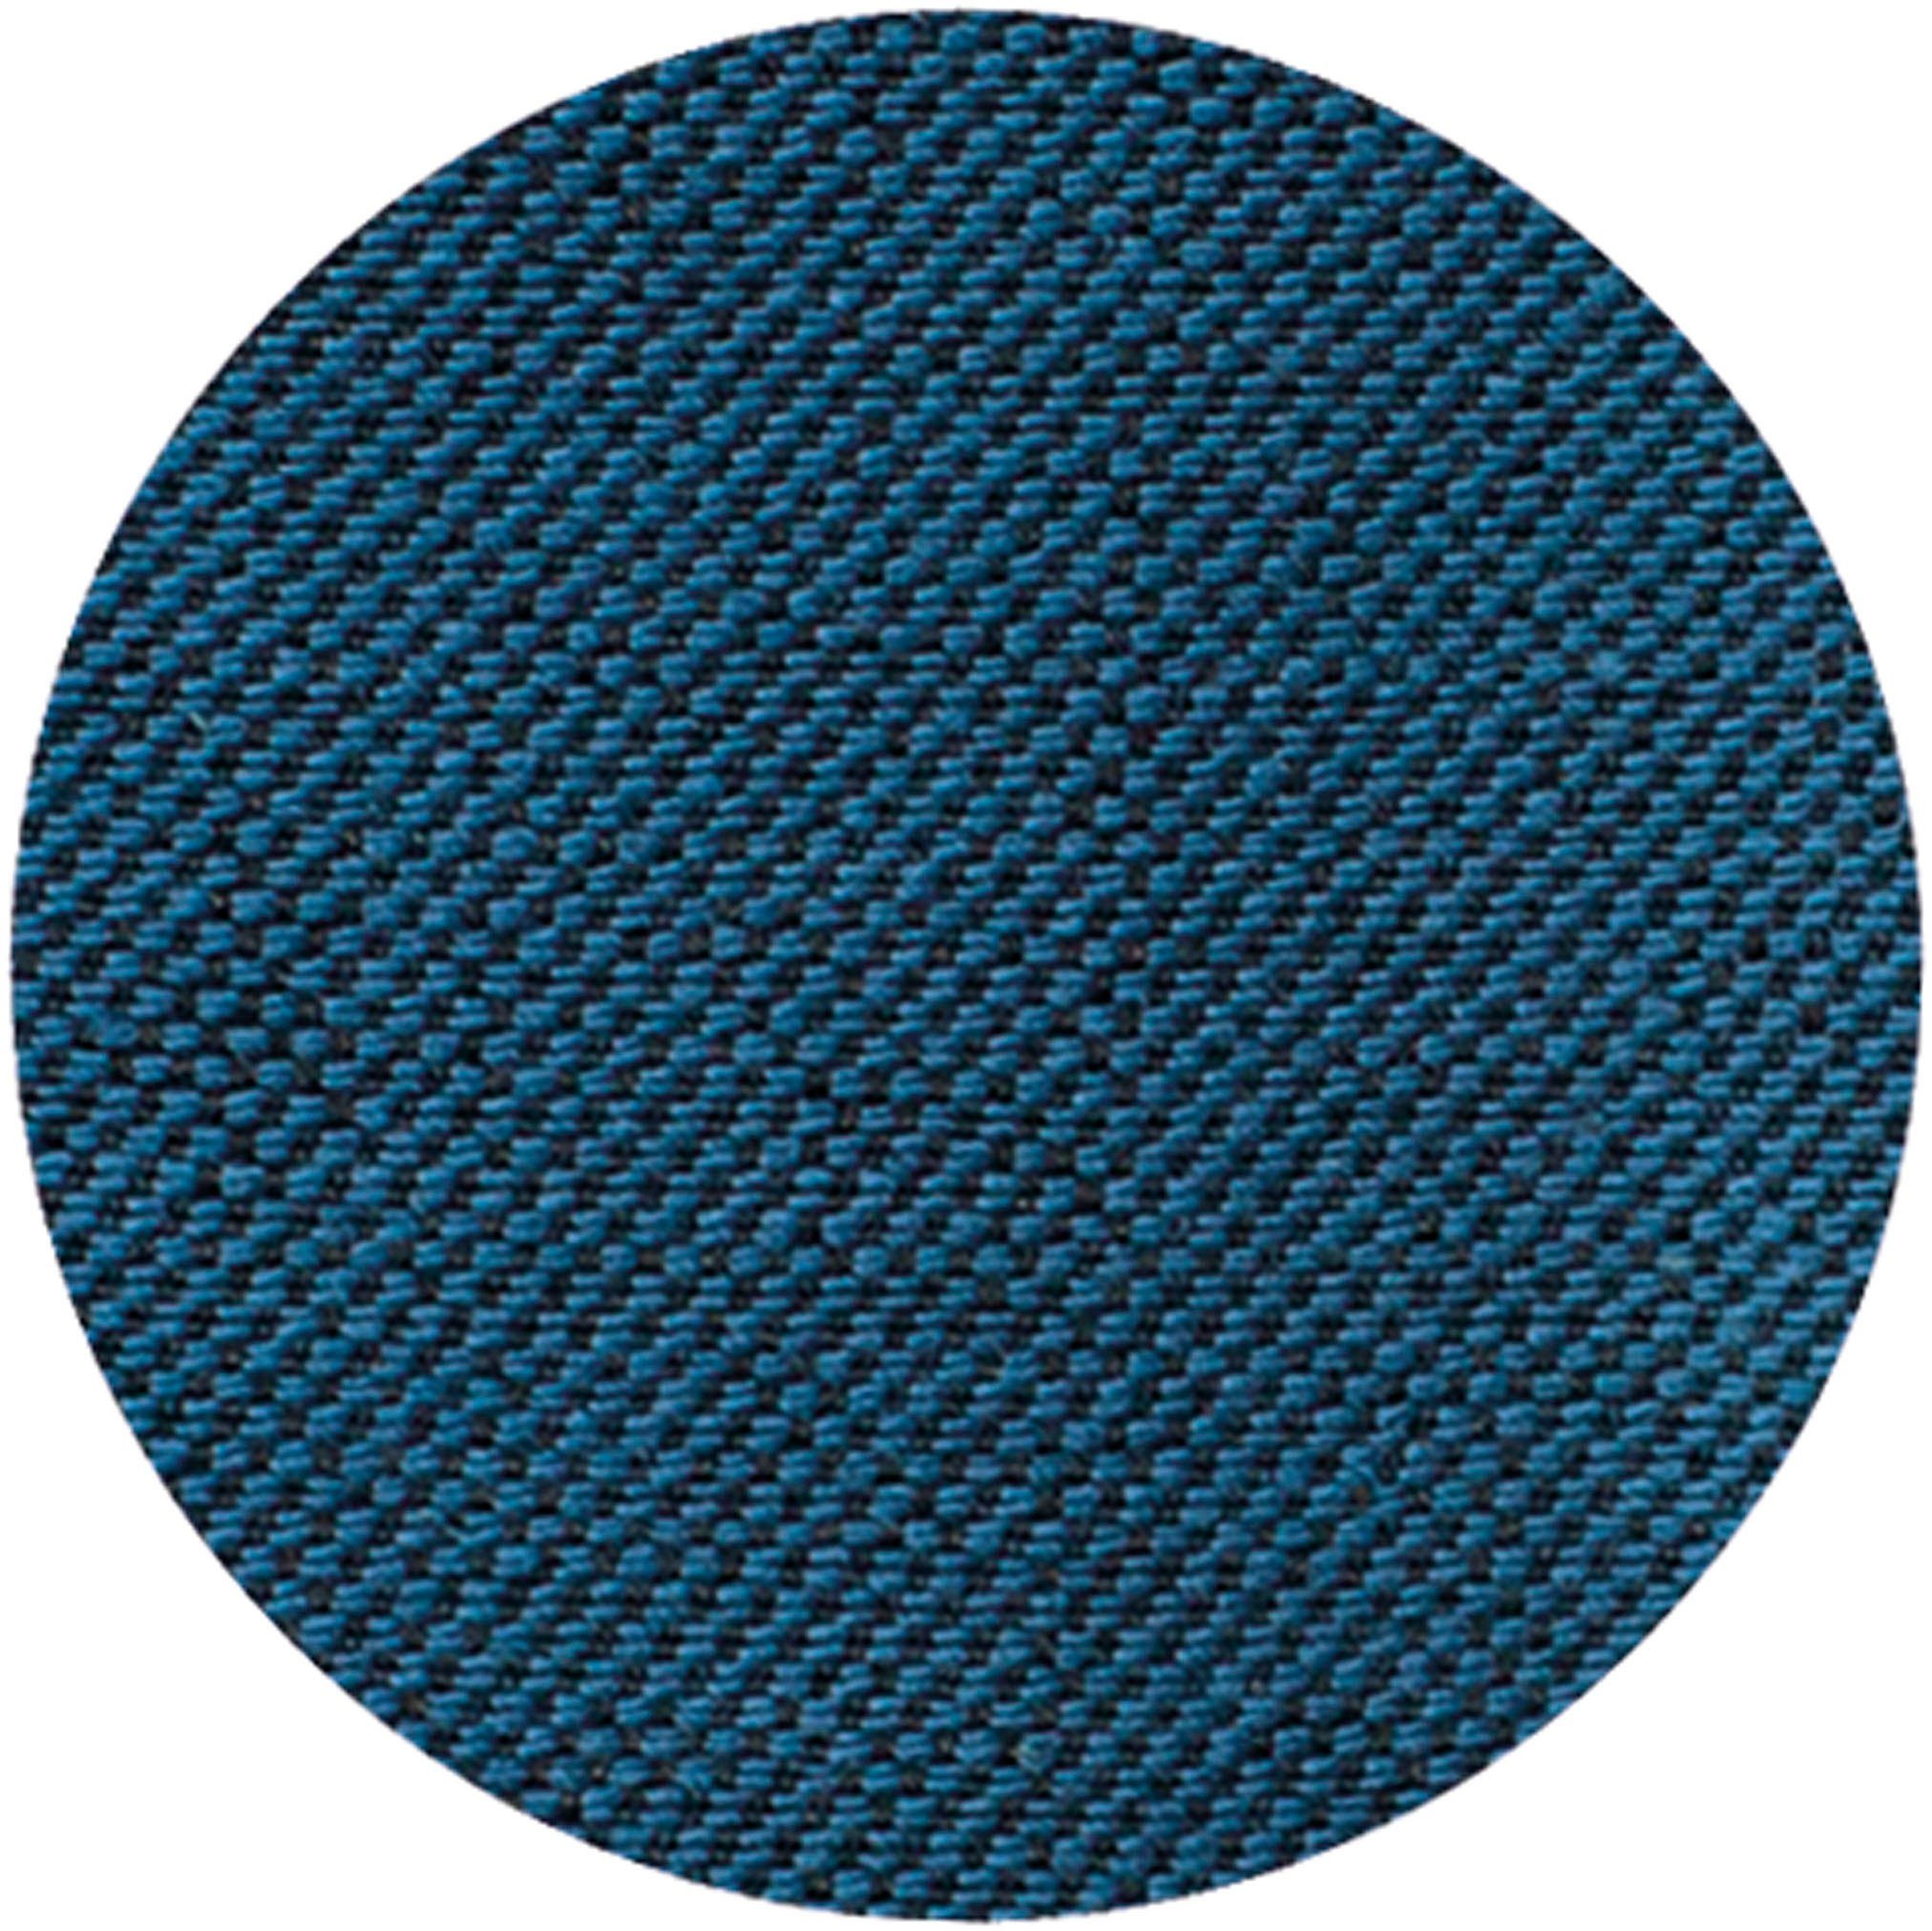 Vorhang Solo, blau (1 SCHÖNER Lederapplikation WOHNEN-Kollektion, Jacquard, Multifunktionsband St), mit blickdicht